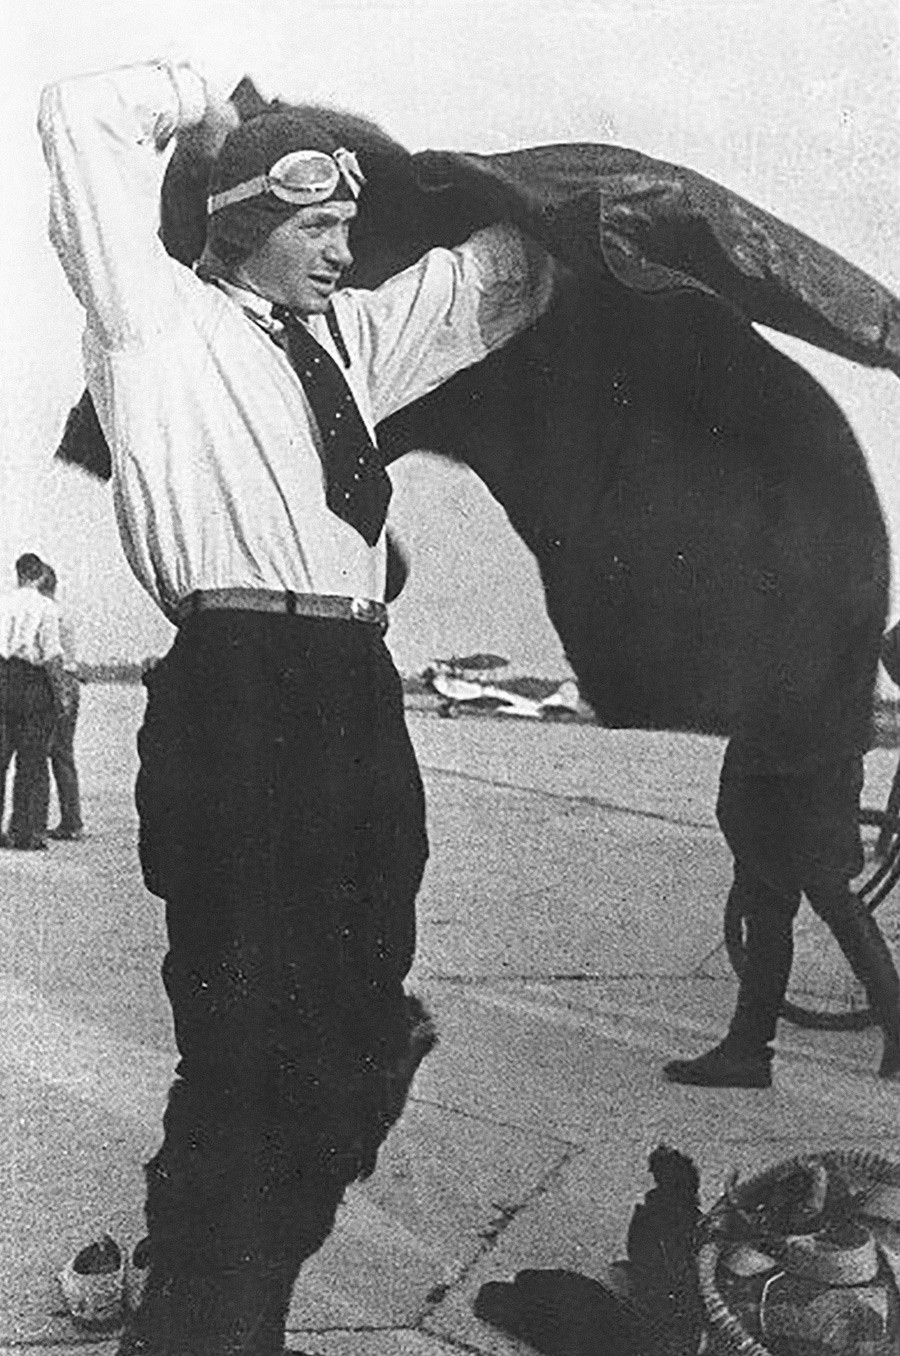 Pilote d’essai de Vladimir Kokkinaki avant un vol, années 1930

